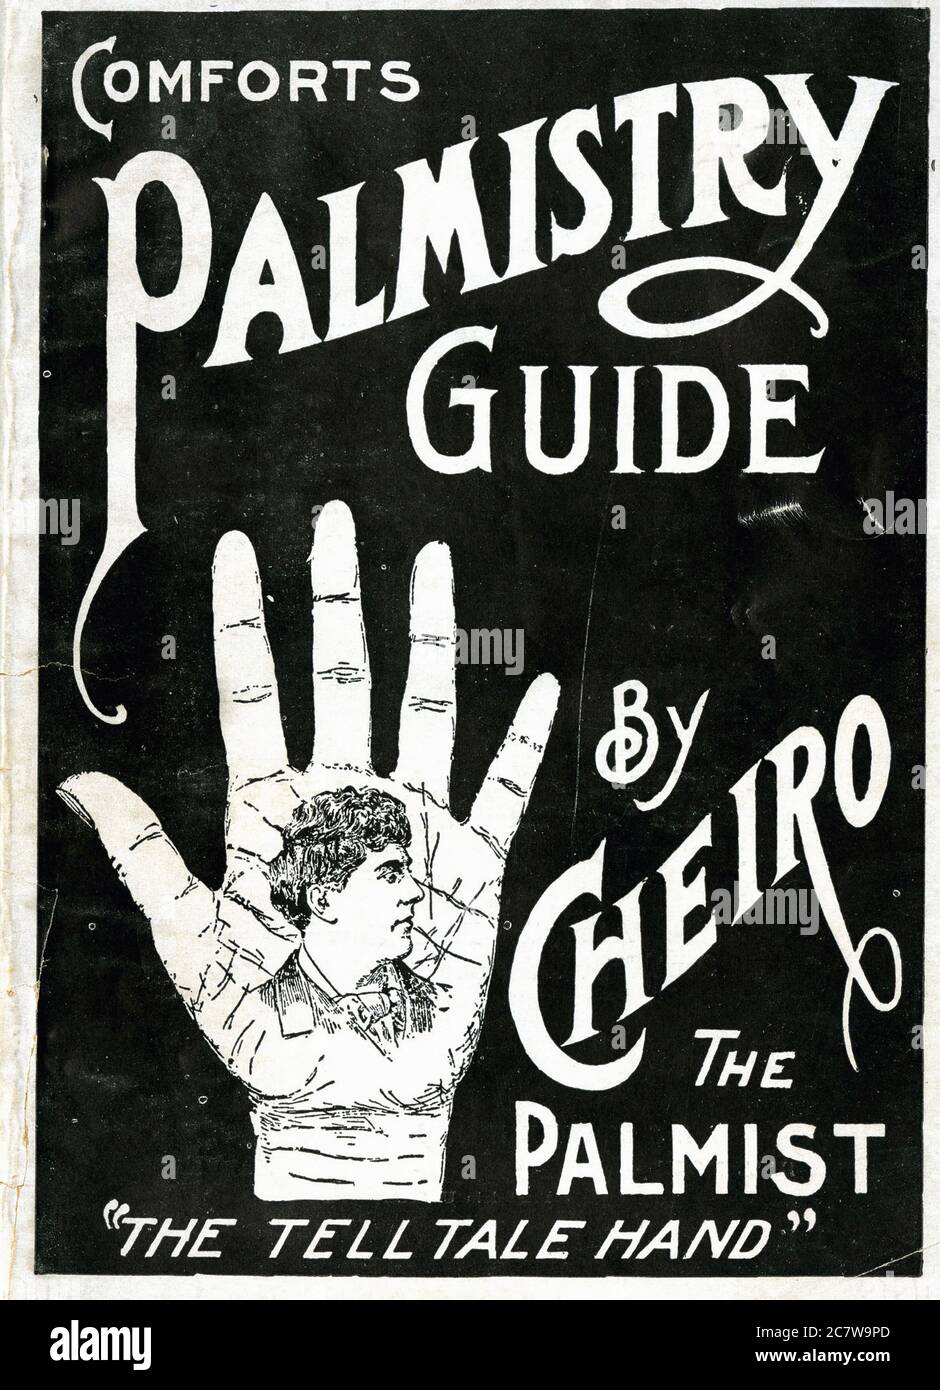 Comforts Palmistry Guide - Vintage early twenty century american magazine Stock Photo